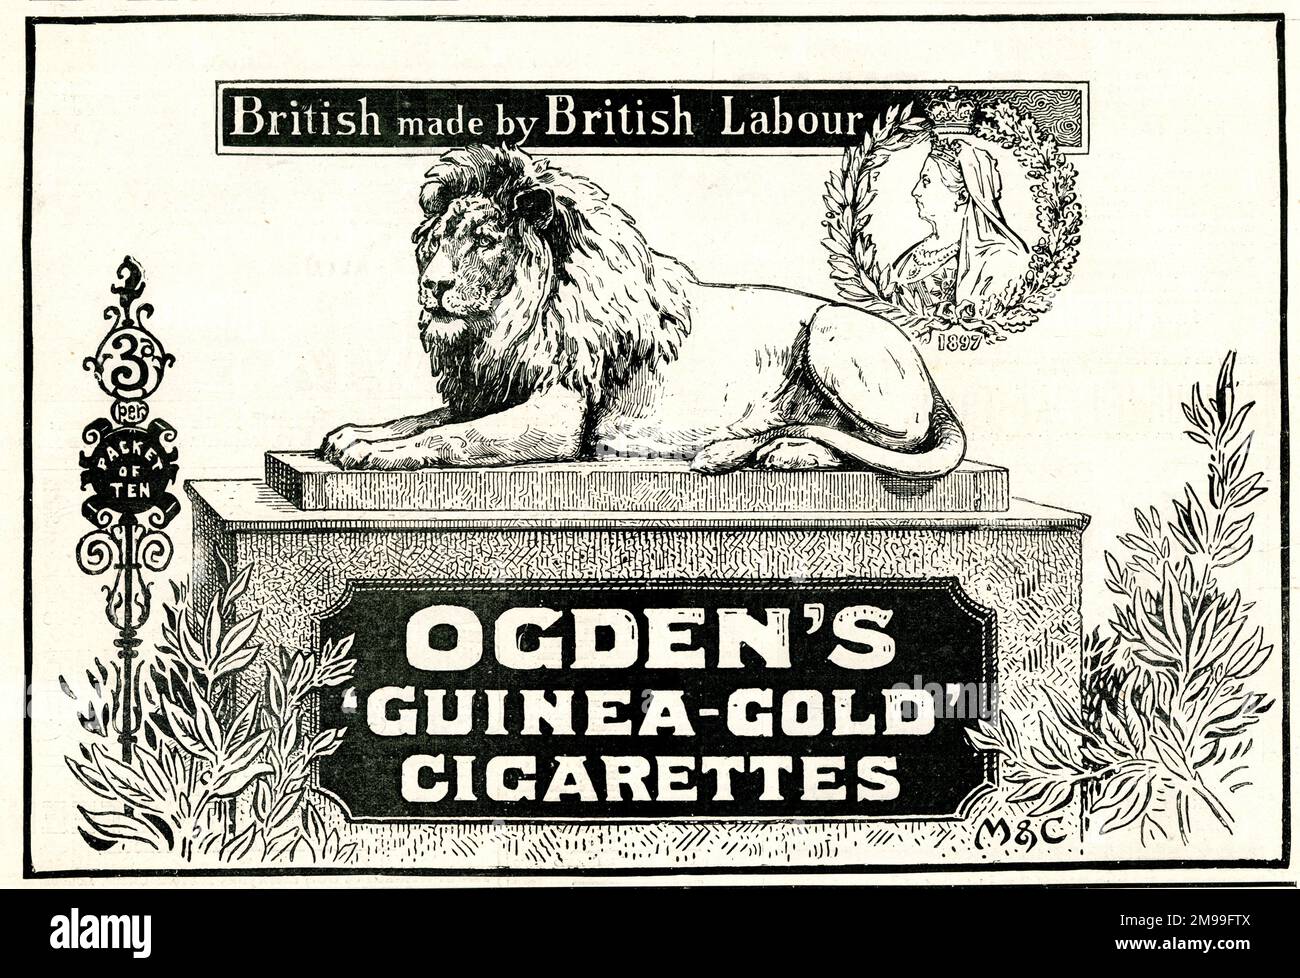 Advert for Ogden's Guinea-Gold Cigarettes. Stock Photo